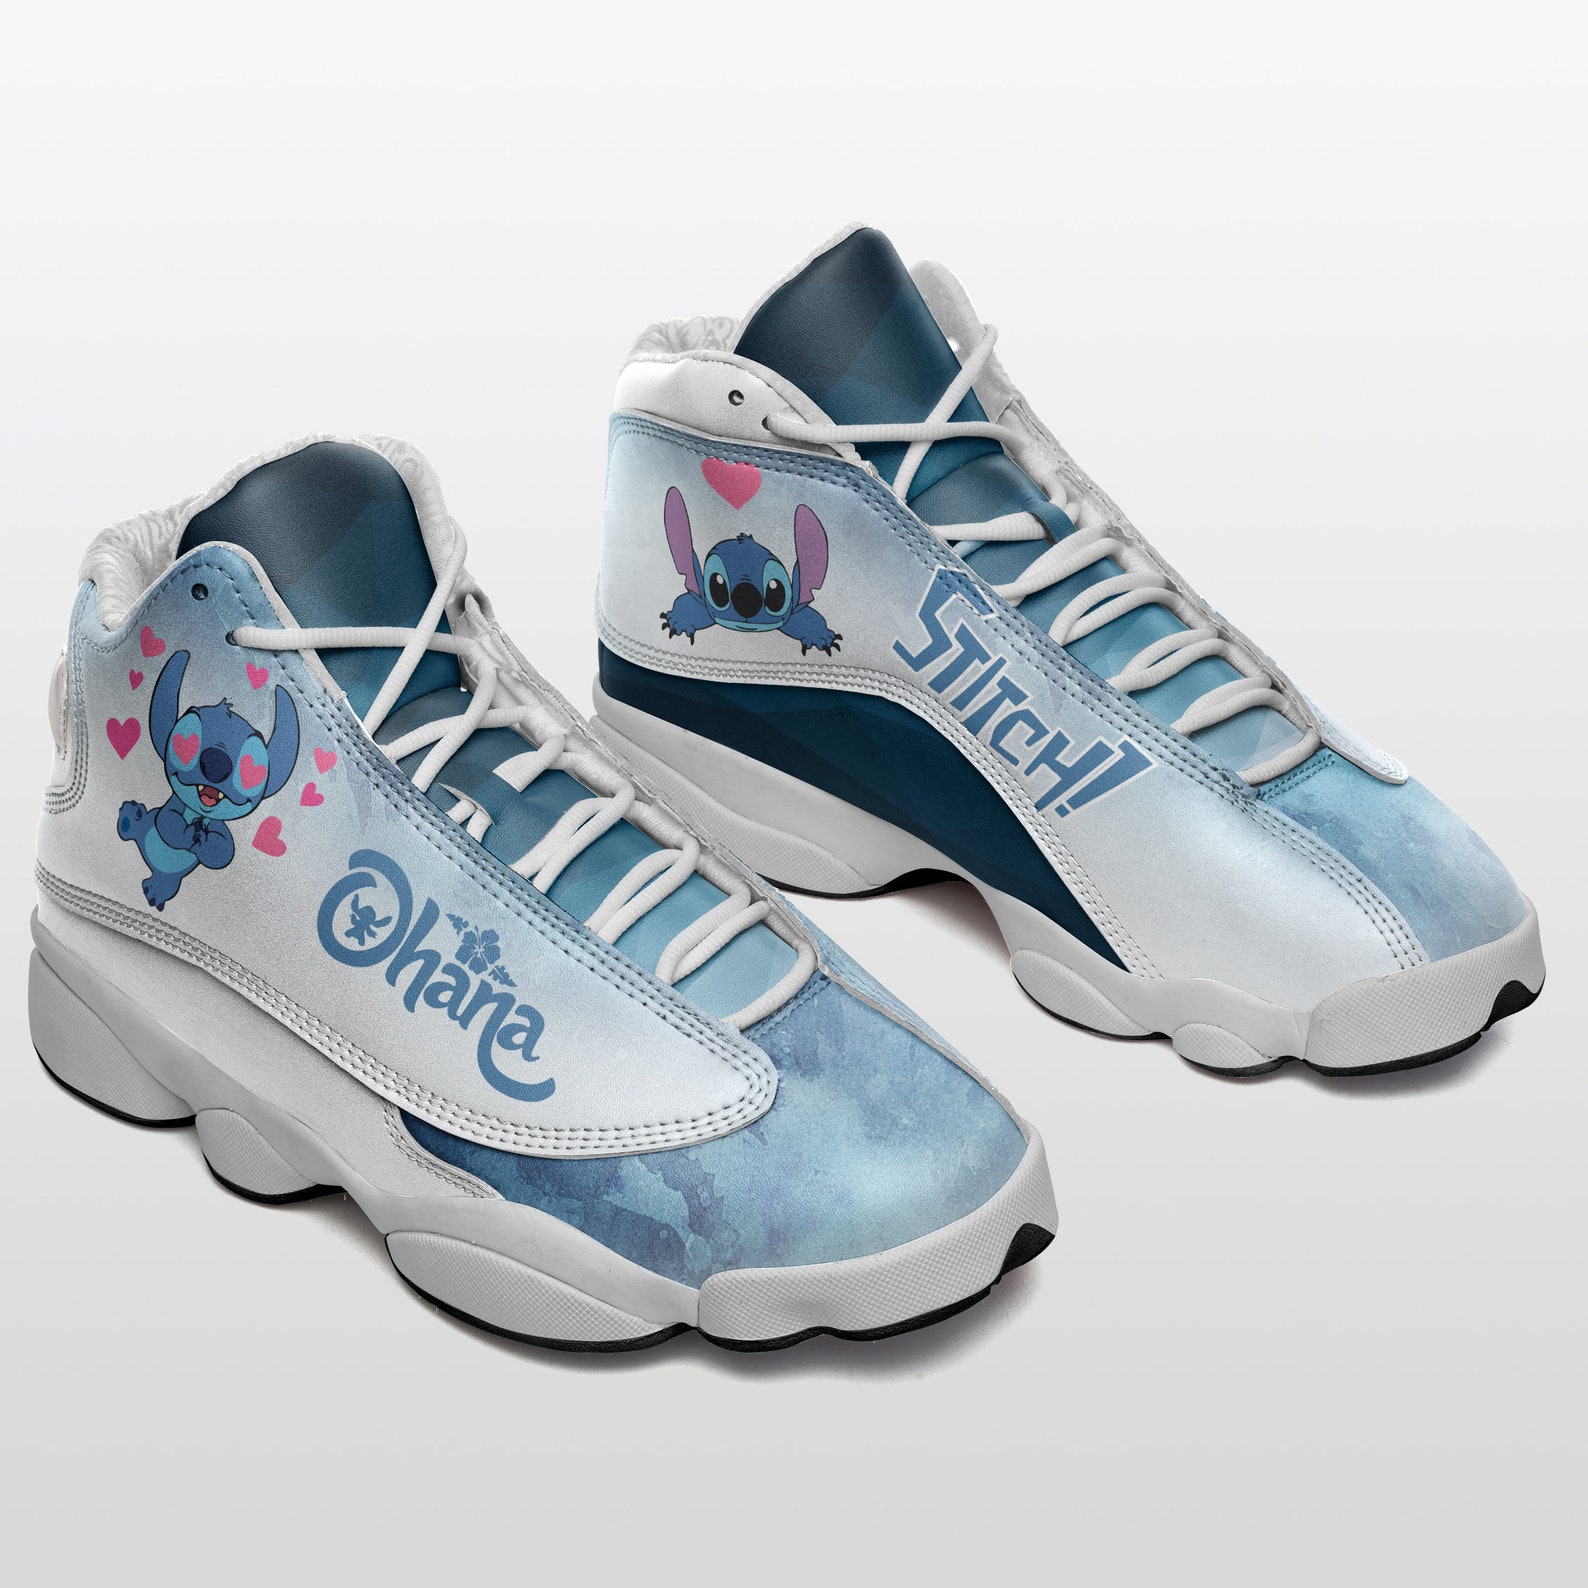 Stitch Disney Jordan 13 Shoes Custom Jd13 Sneakers Gift For | Etsy